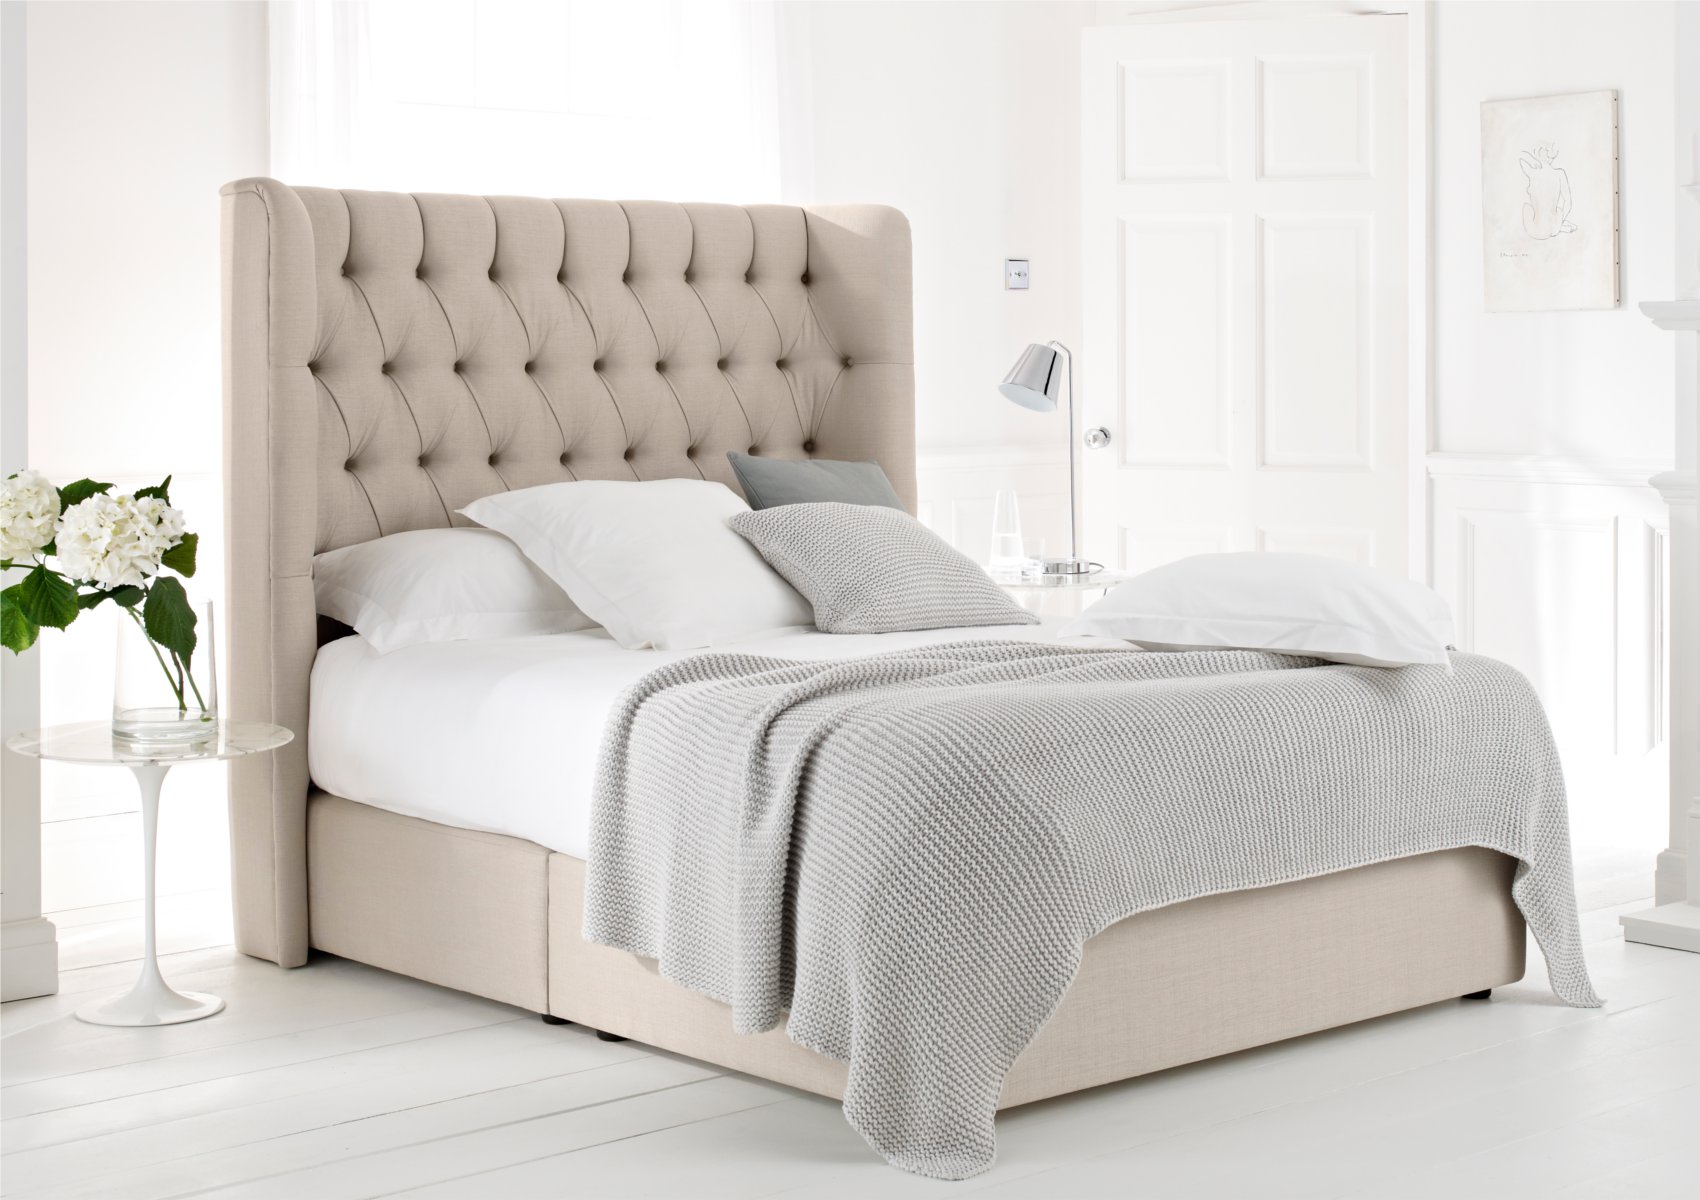 View Knightsbridge Harbour Grey Upholstered Super King Divan Bed Time4Sleep information